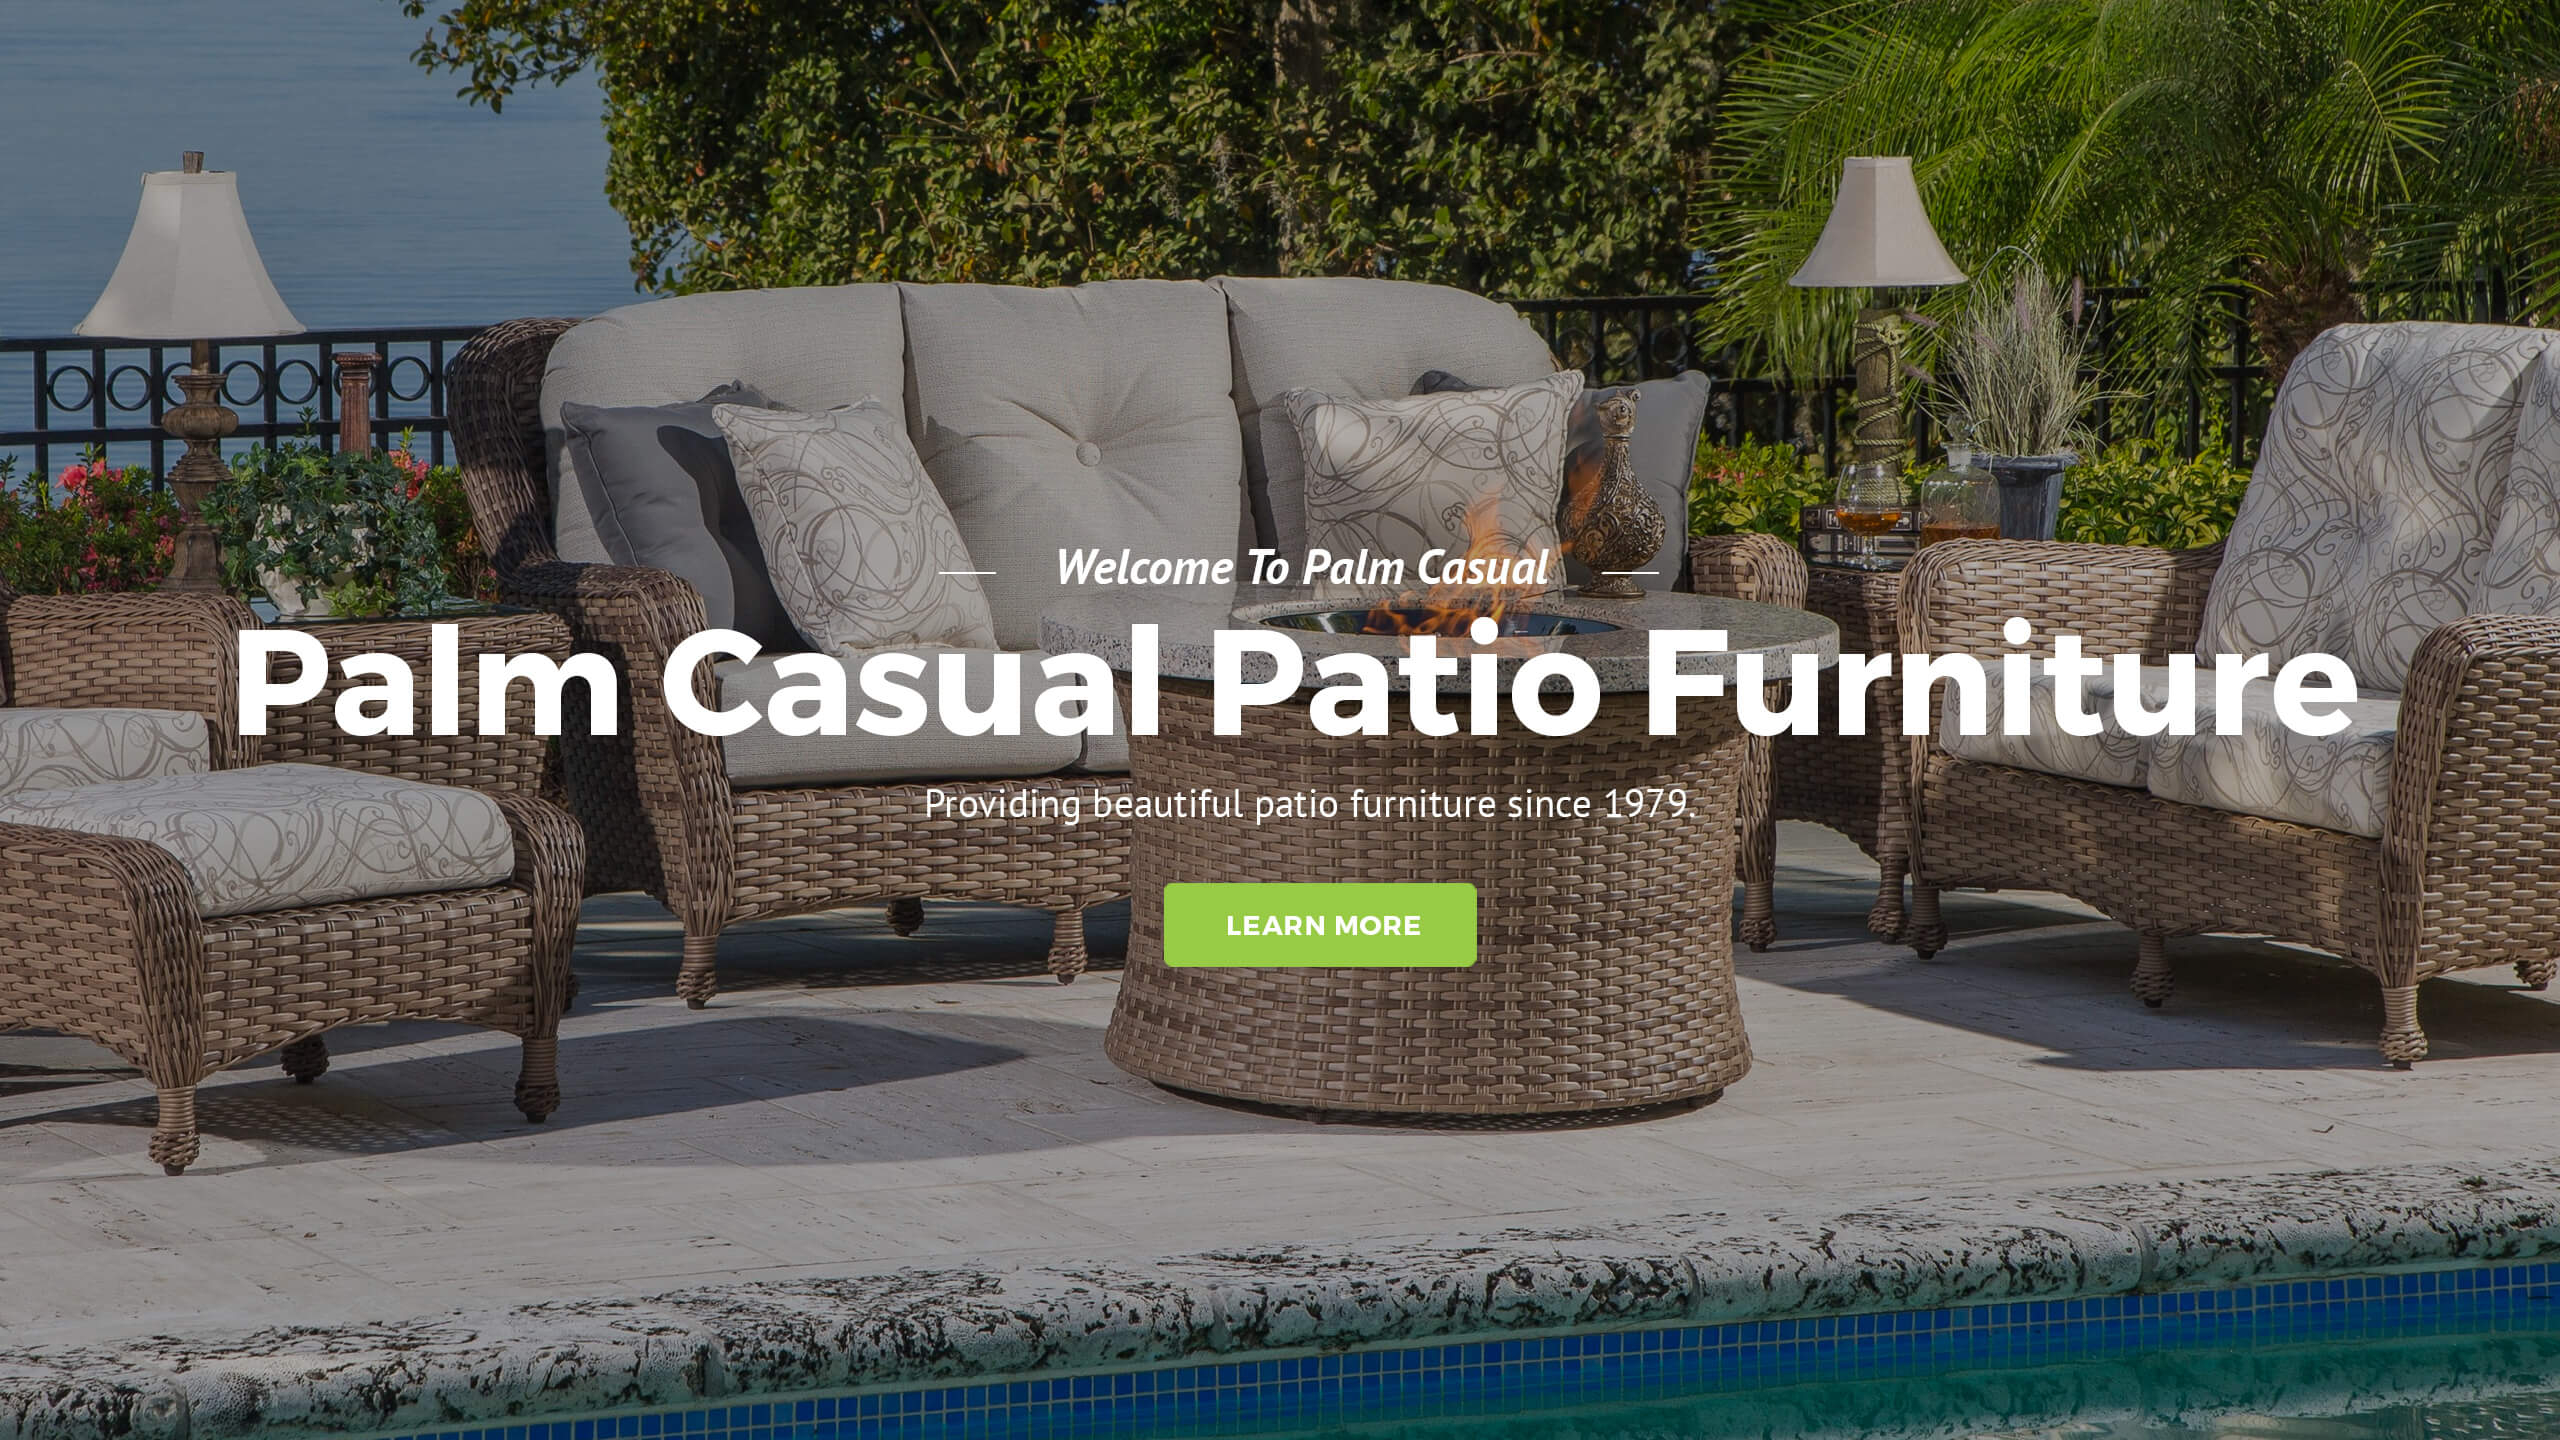 Outdoor Patio Furniture Orlando Cast Aluminium Furniture intended for size 2560 X 1440